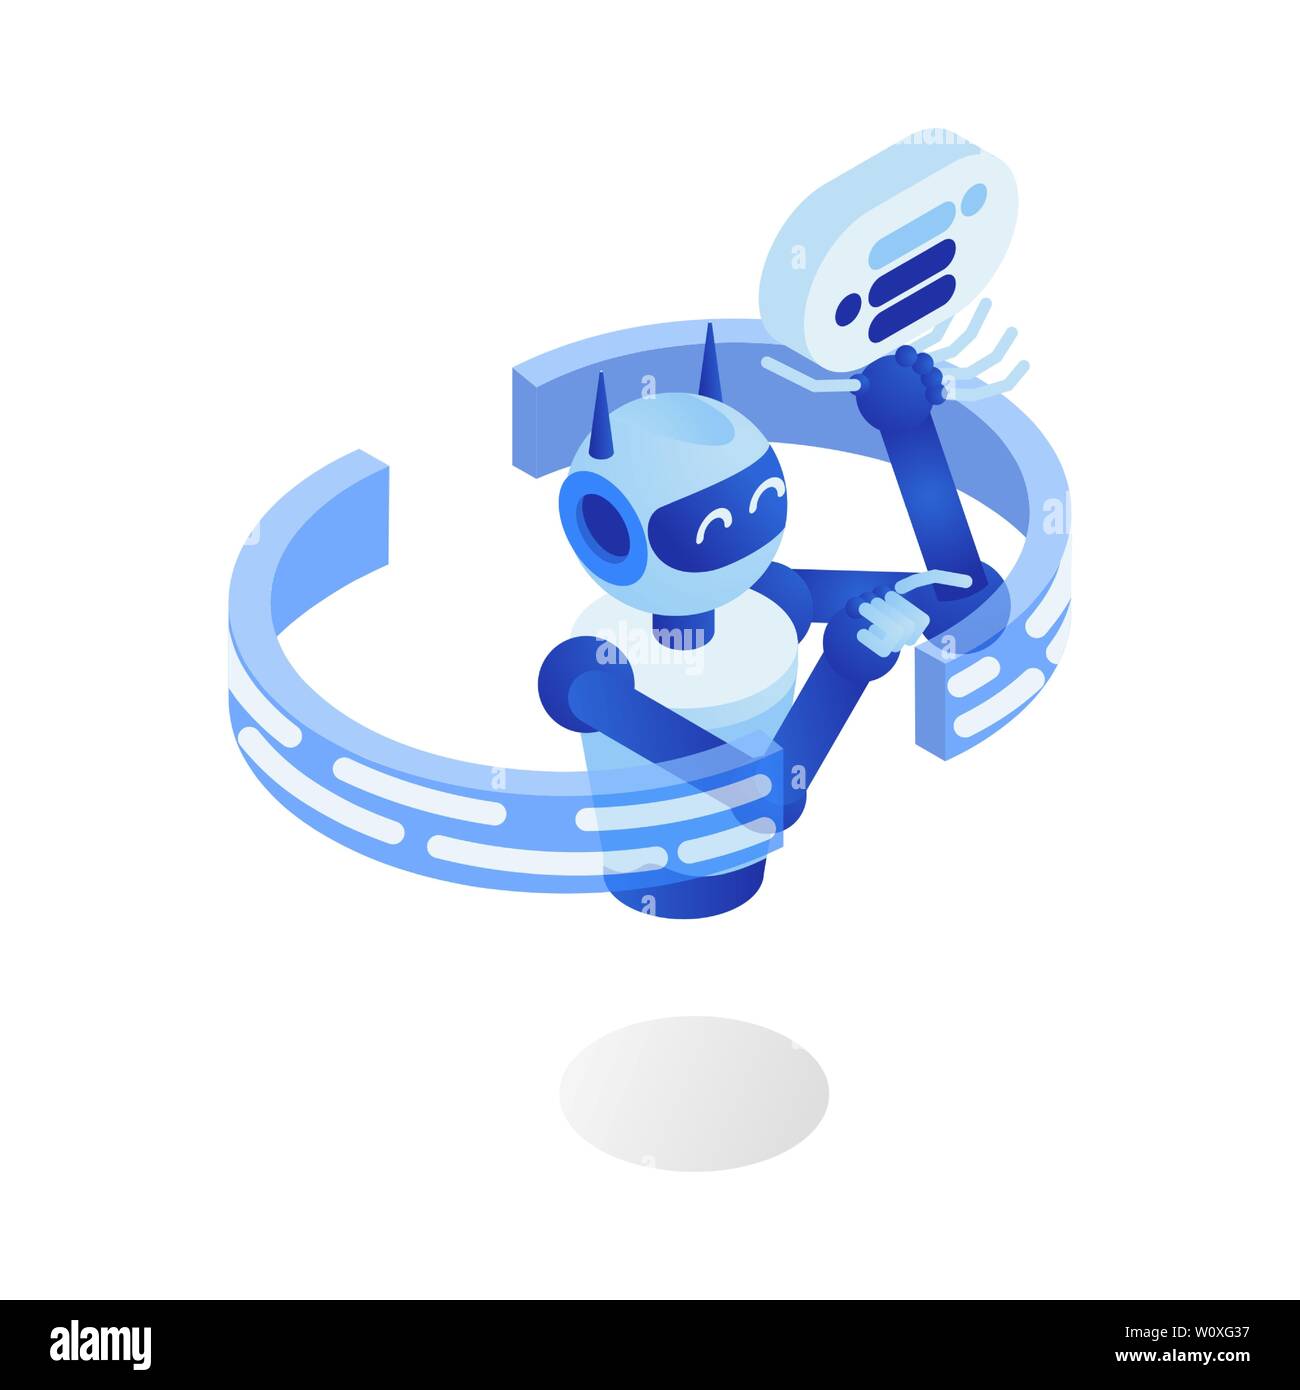 Internet bot Flachbild Vector Illustration. Futuristische Roboter Programm, virtueller Assistent, chatbot, 3d cartoon Charakter. Künstliche Intelligenz, KI, software App, Daten analysieren, Kybernetik Stock Vektor